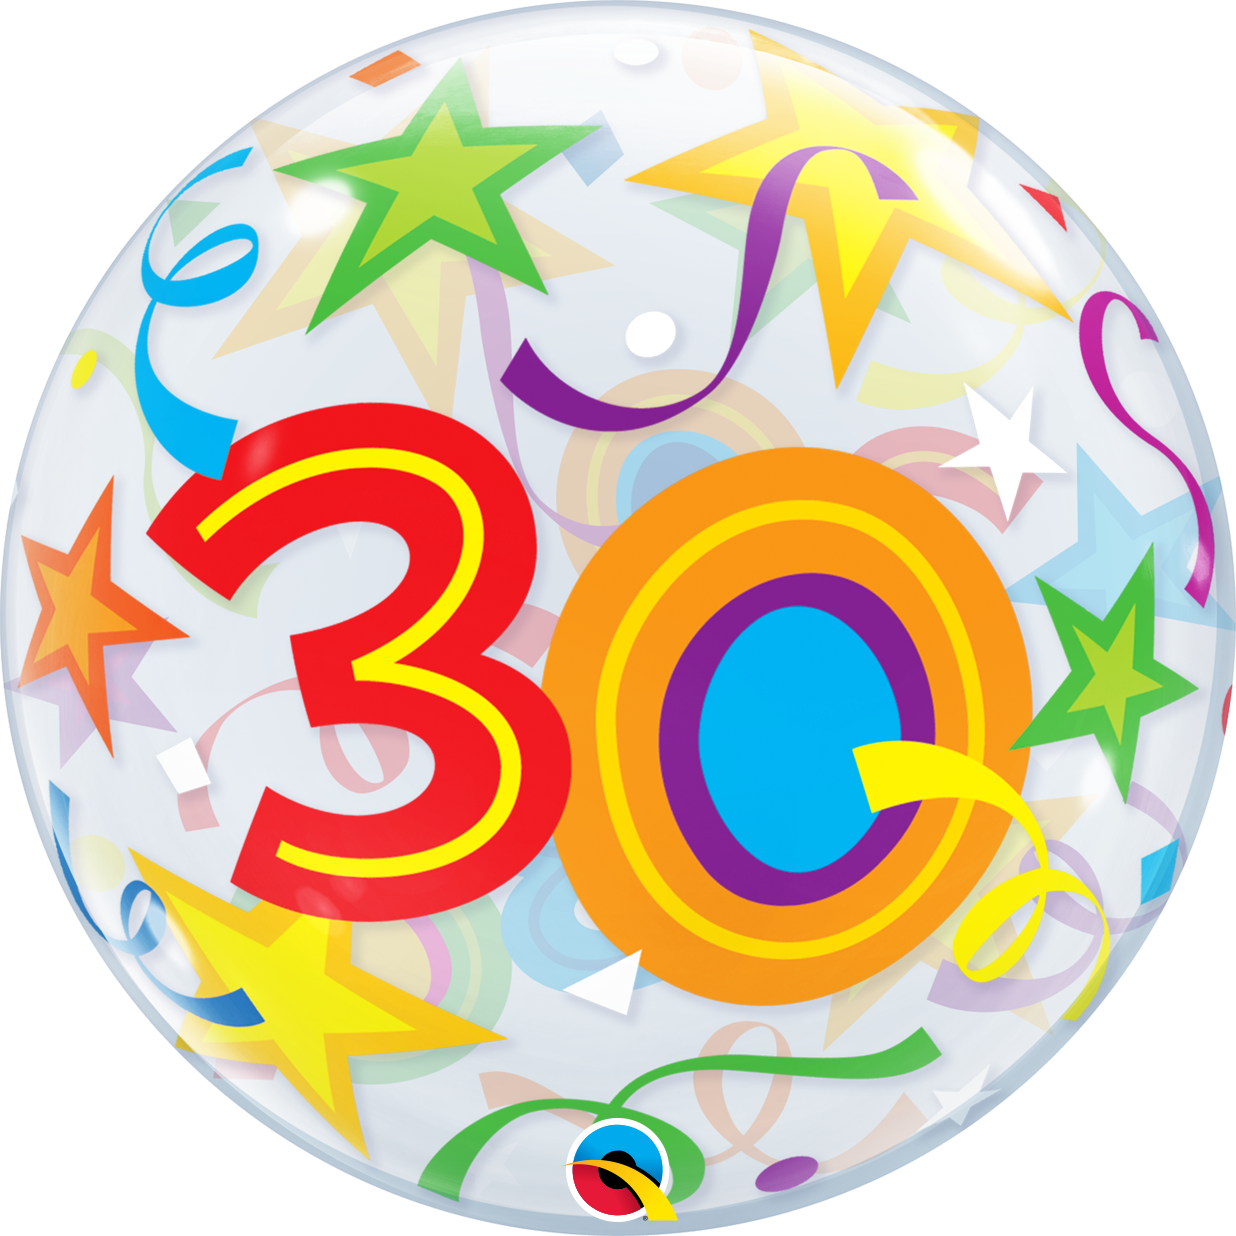 30th Birthday Bubble Balloon with Brilliant Stars & Ribbons